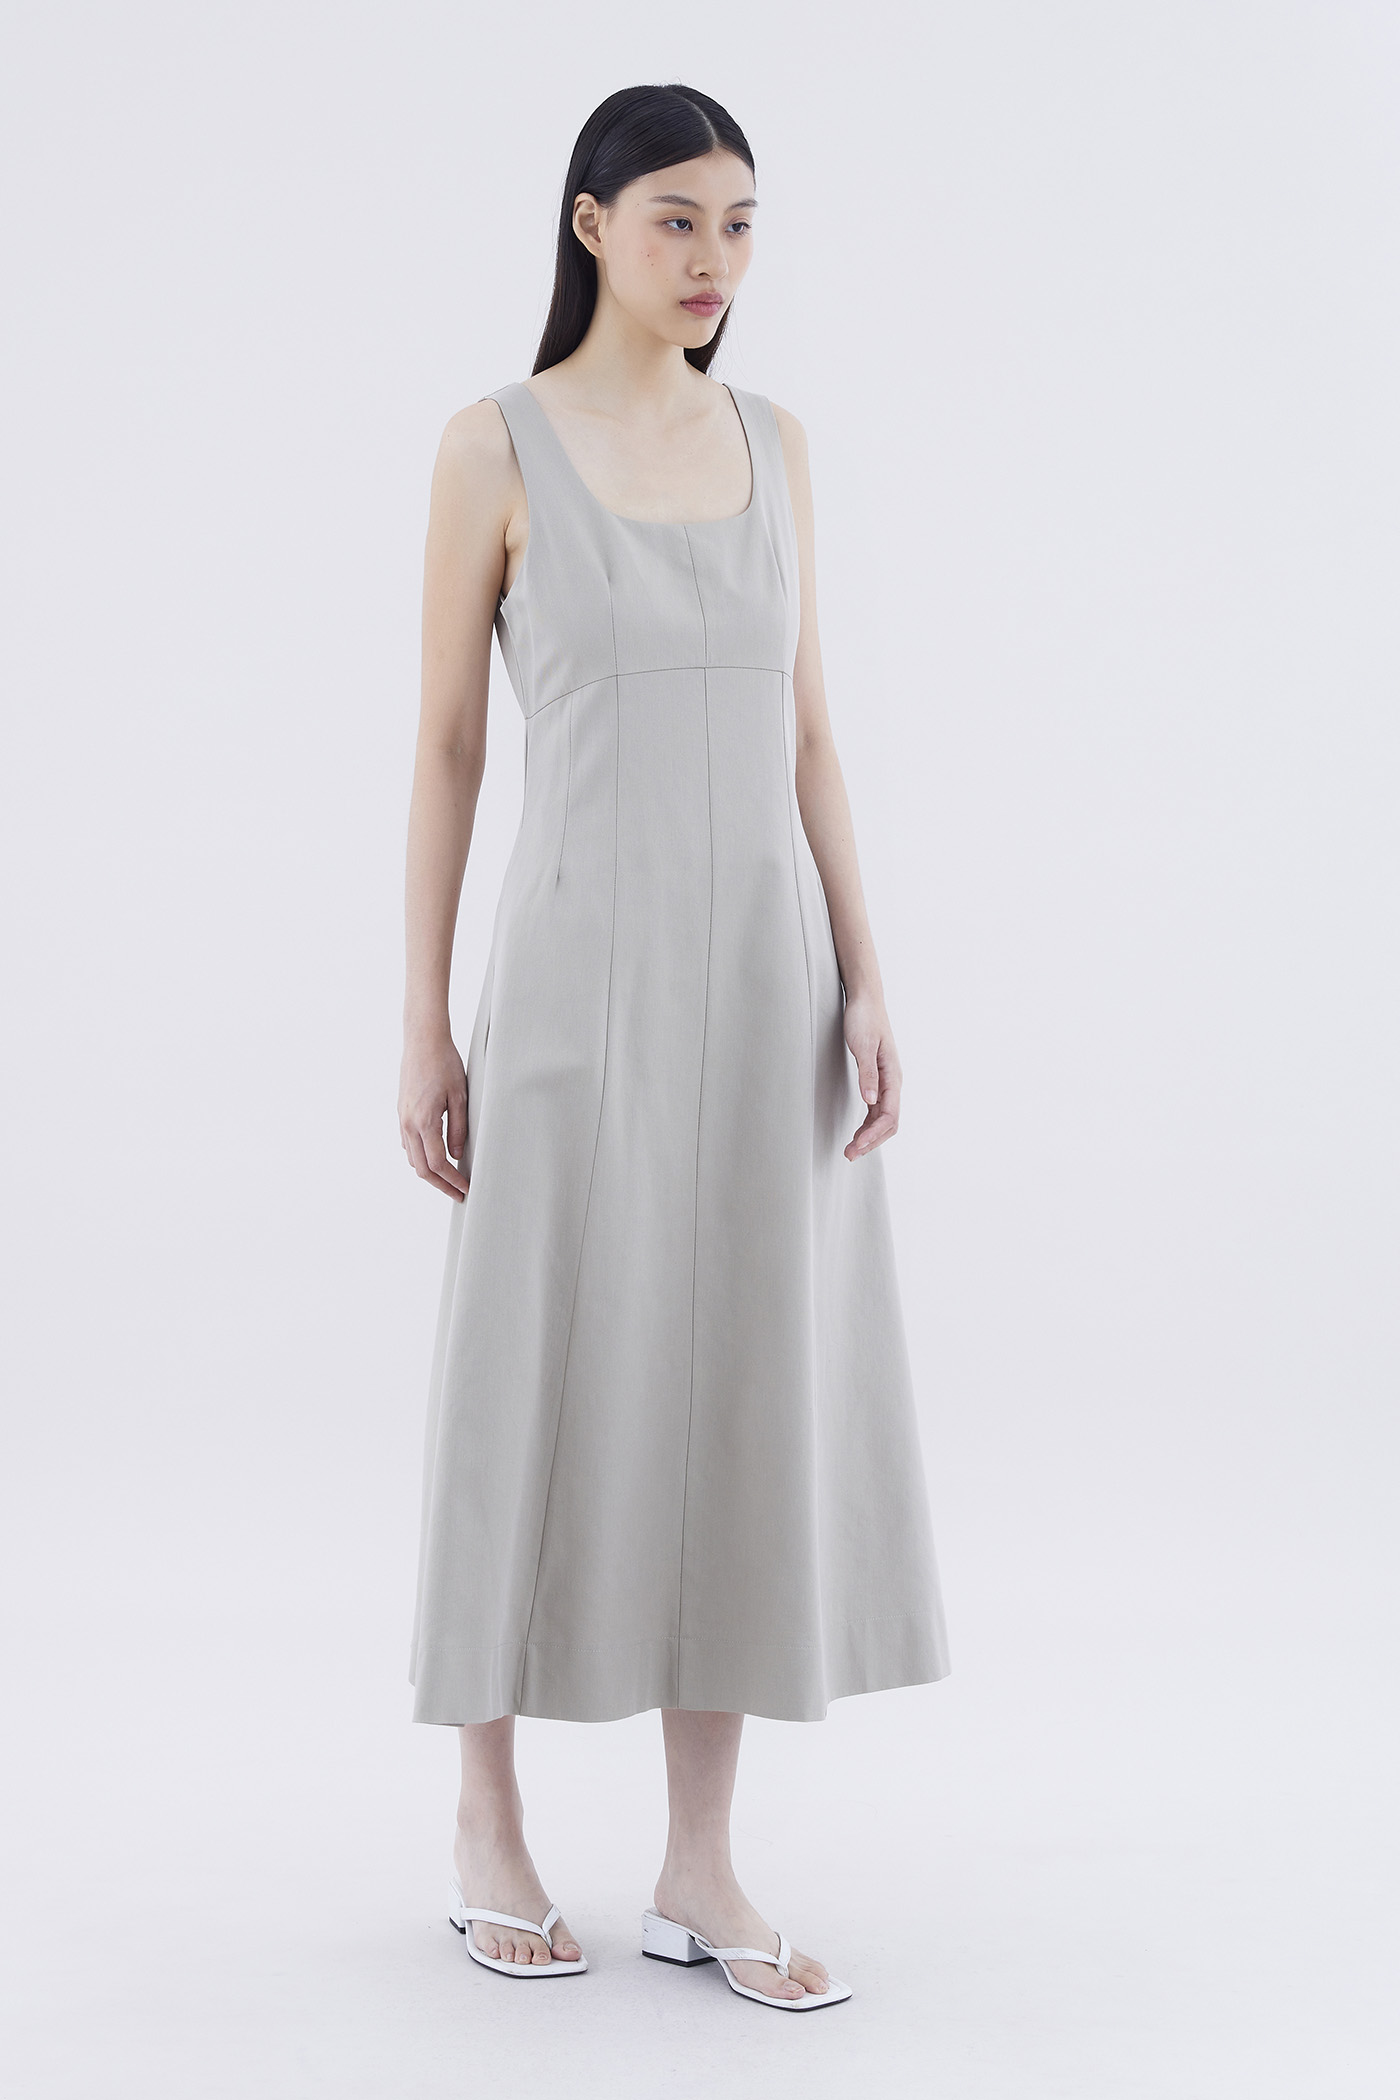 Liesel Panelled Dress | The Editor's Market